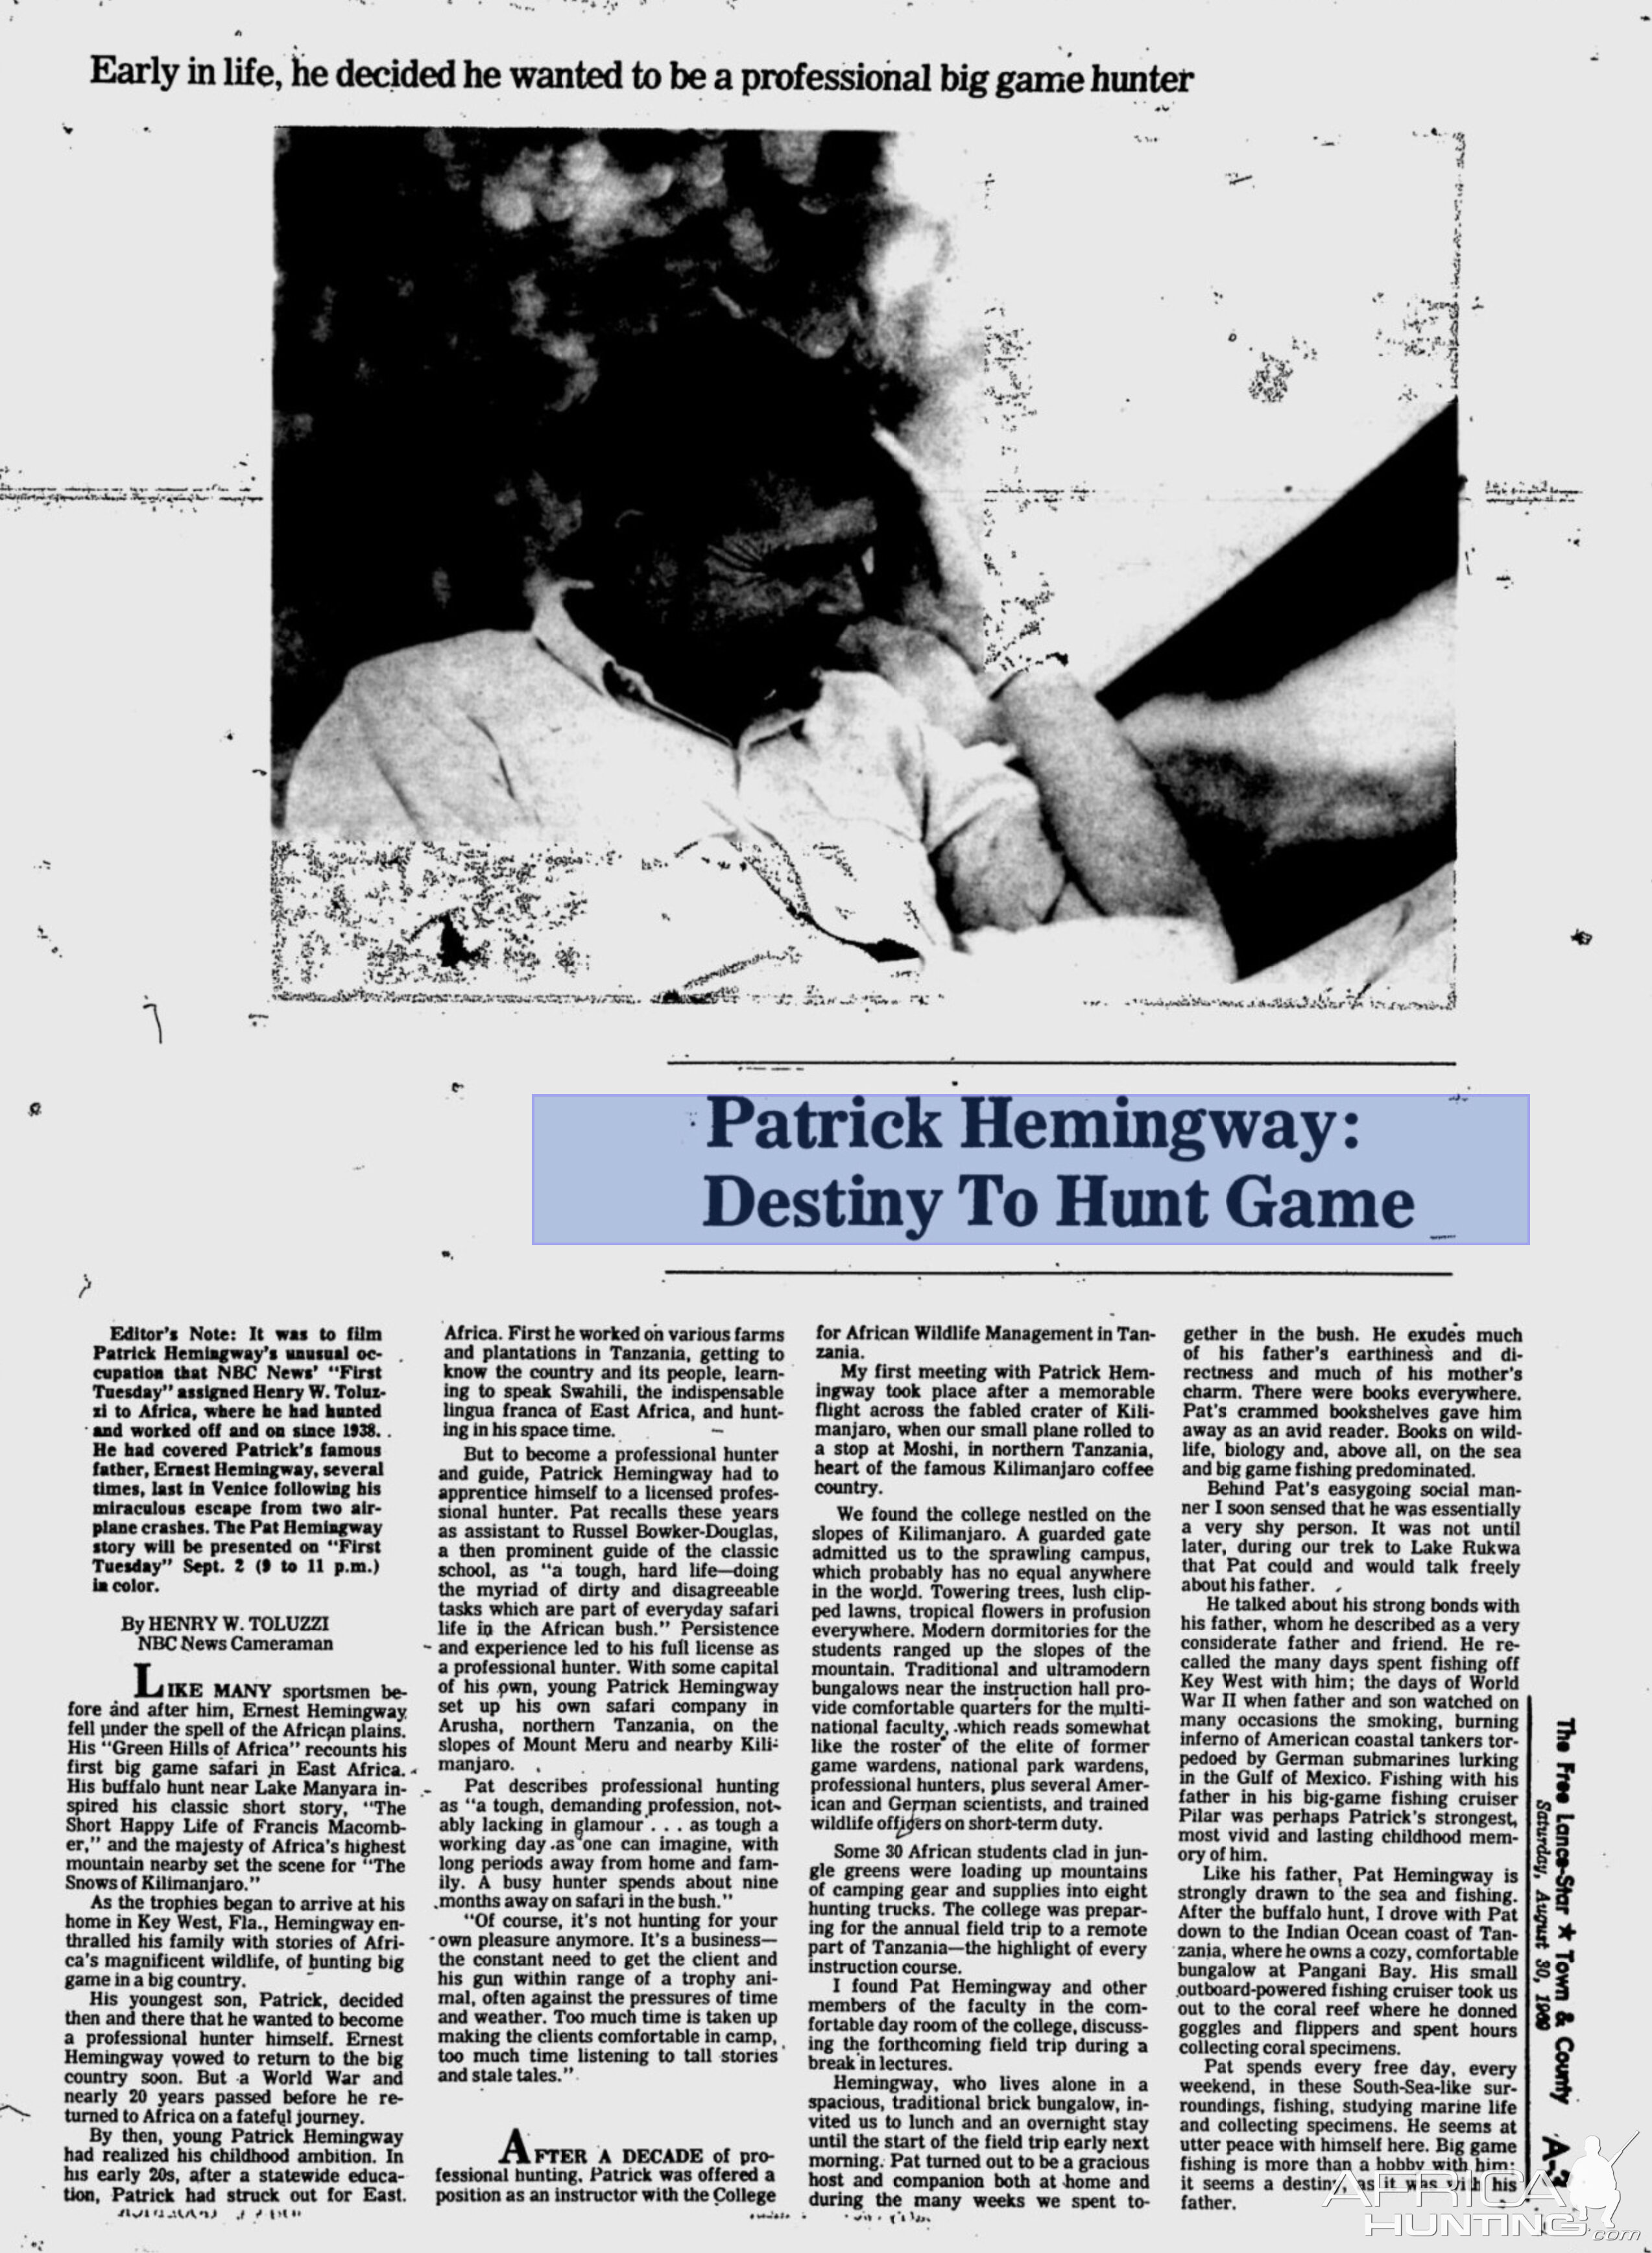 Patrick Hemingway: Destiny To Hunt Game